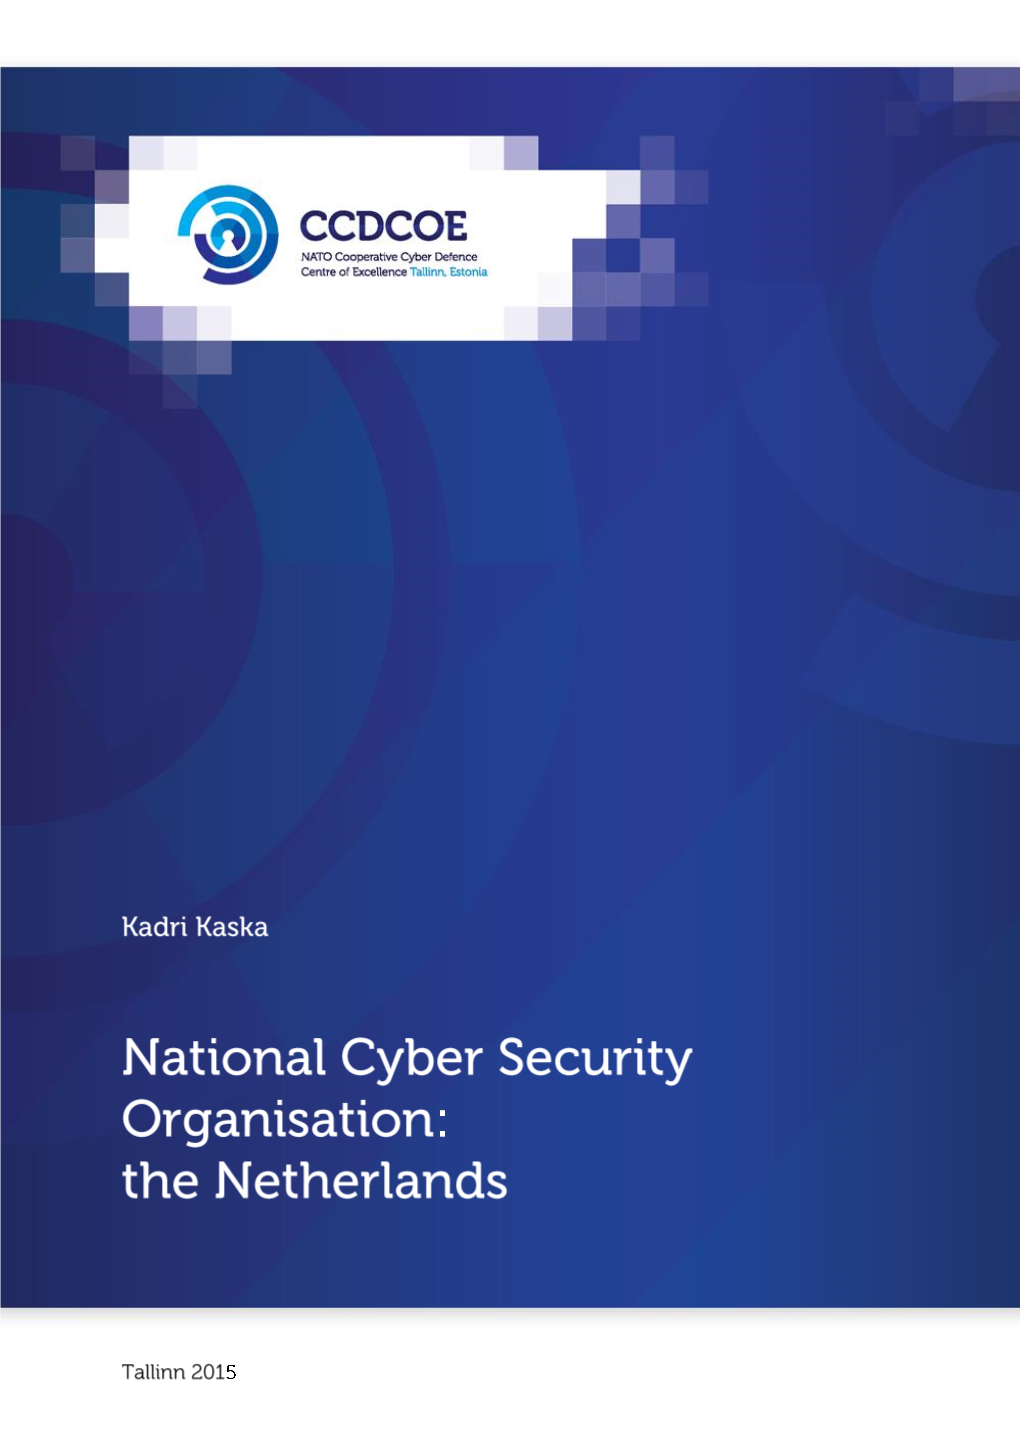 Document-05-Kadri-Kaska-National-Cyber-Security.Pdf